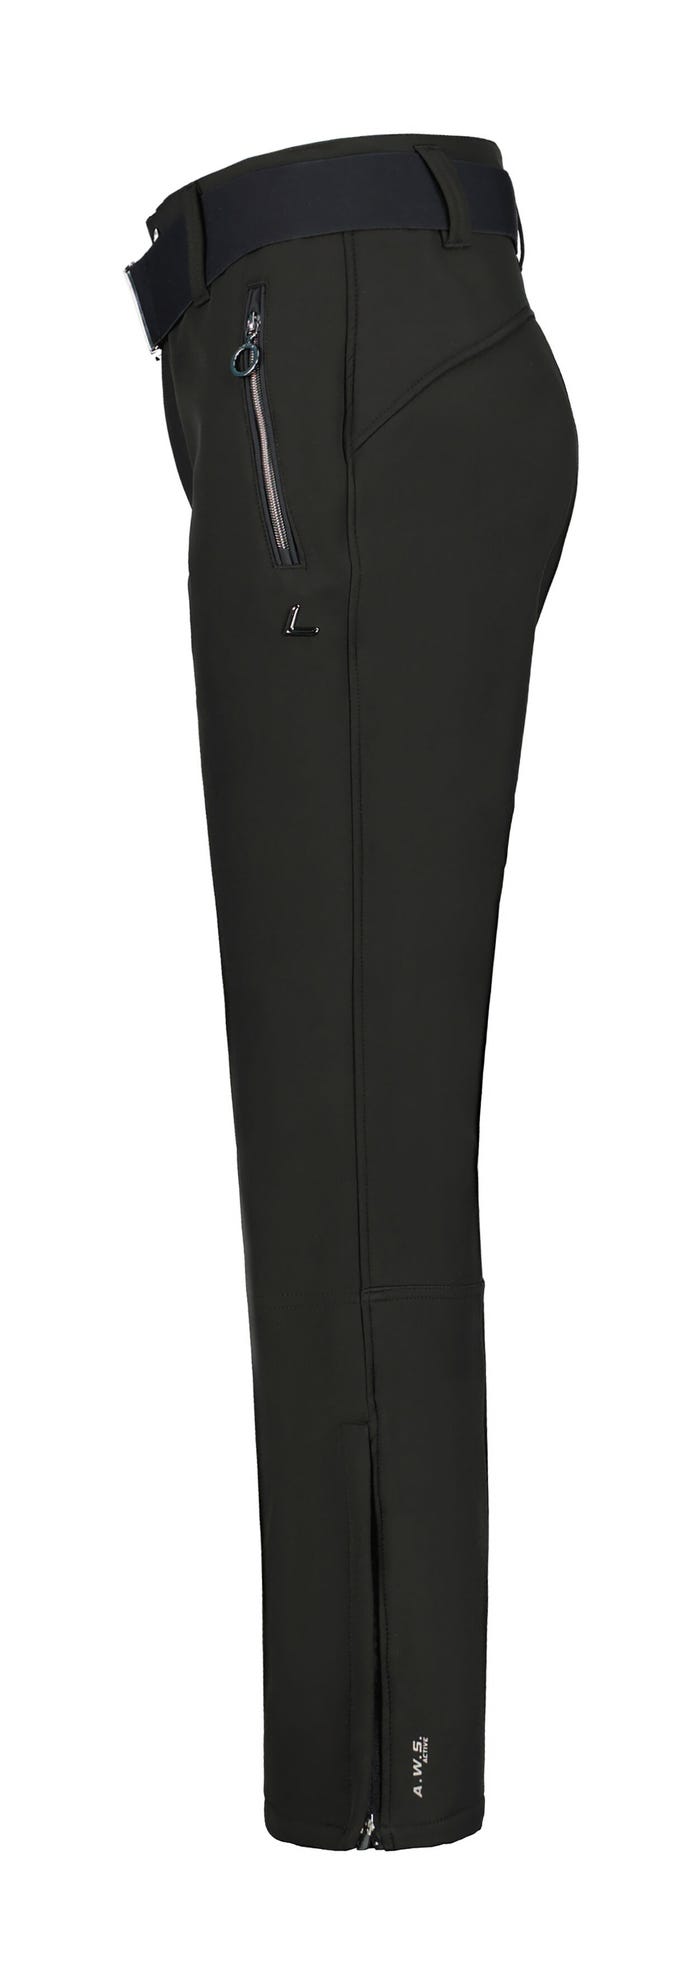 Joentaus Ski Pant - Black - Regular Leg